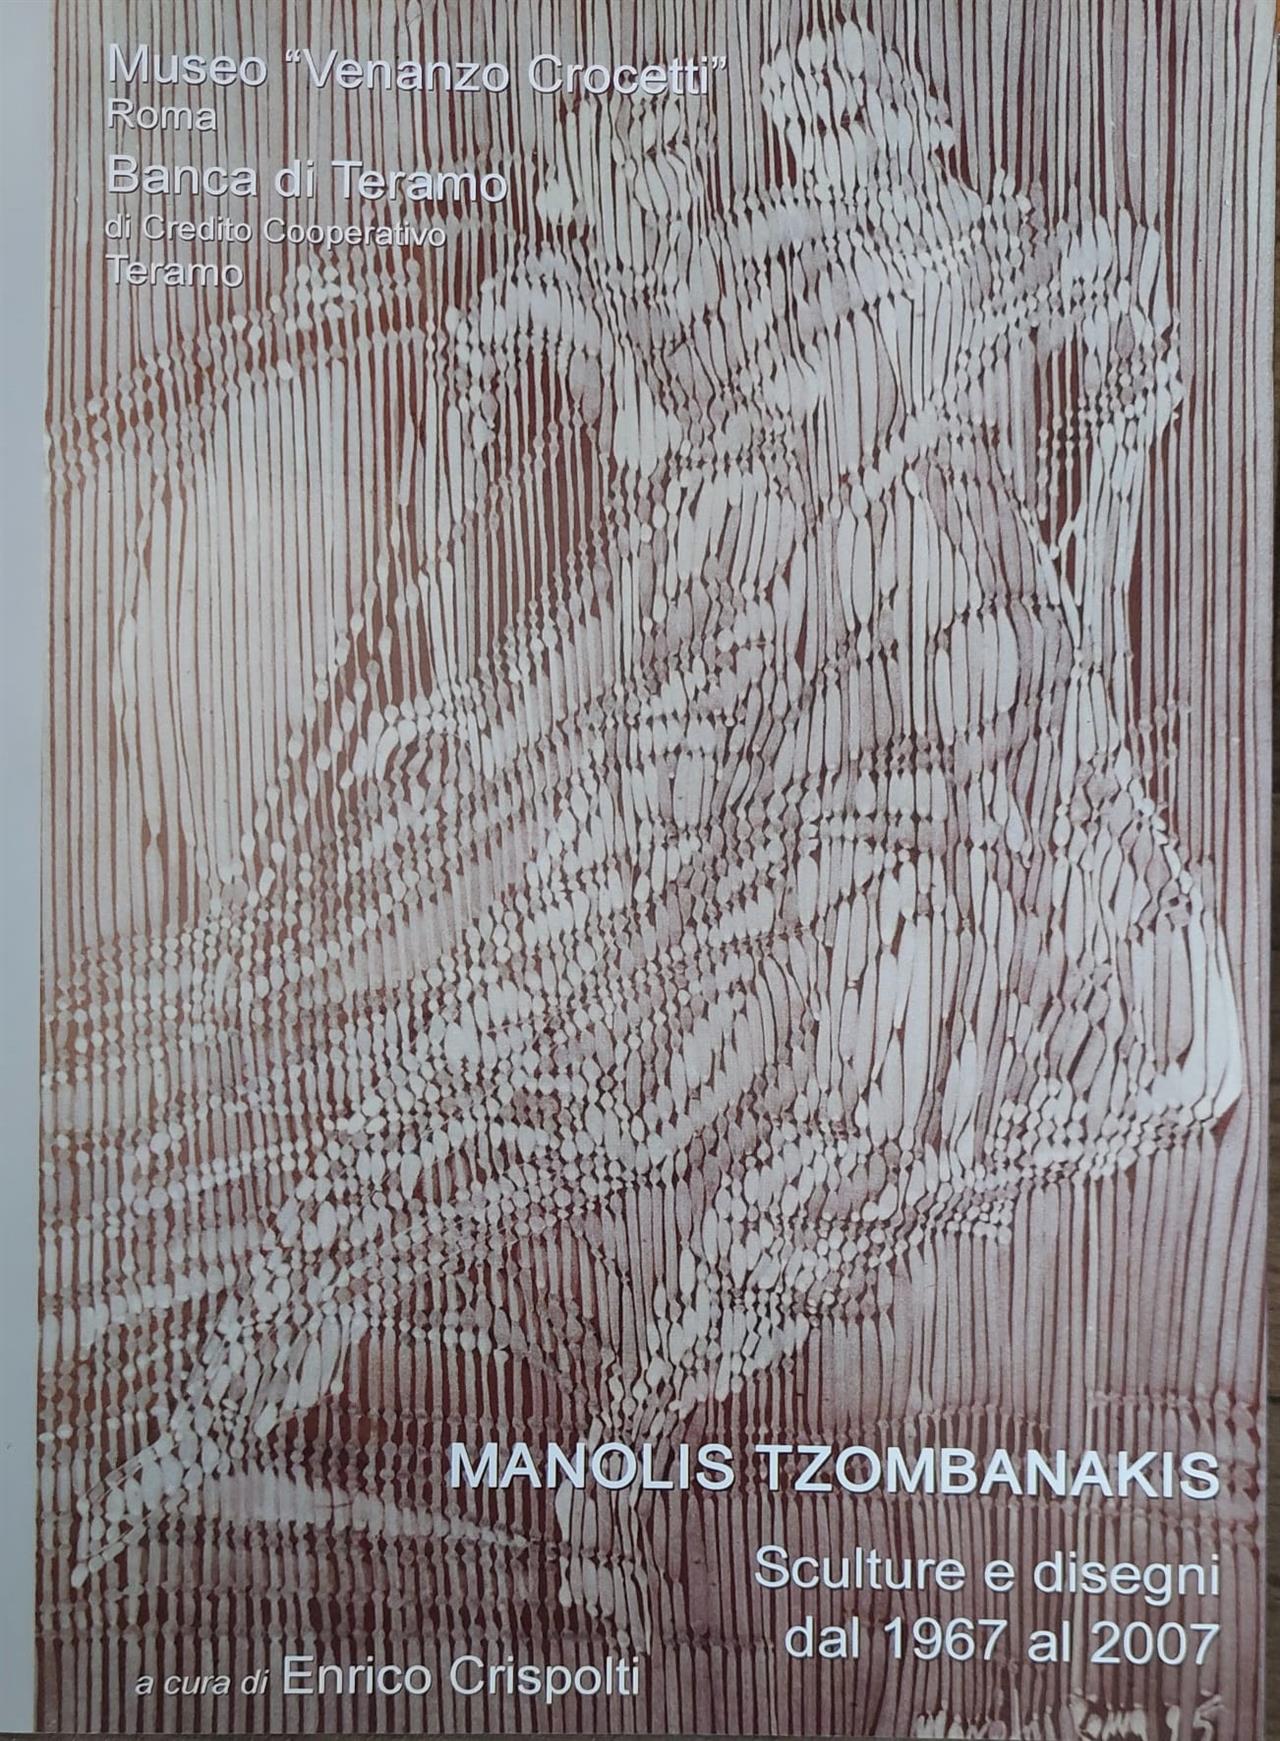 Manolis Tzombanakis. Sculture e disegni dal 1967 al 2007